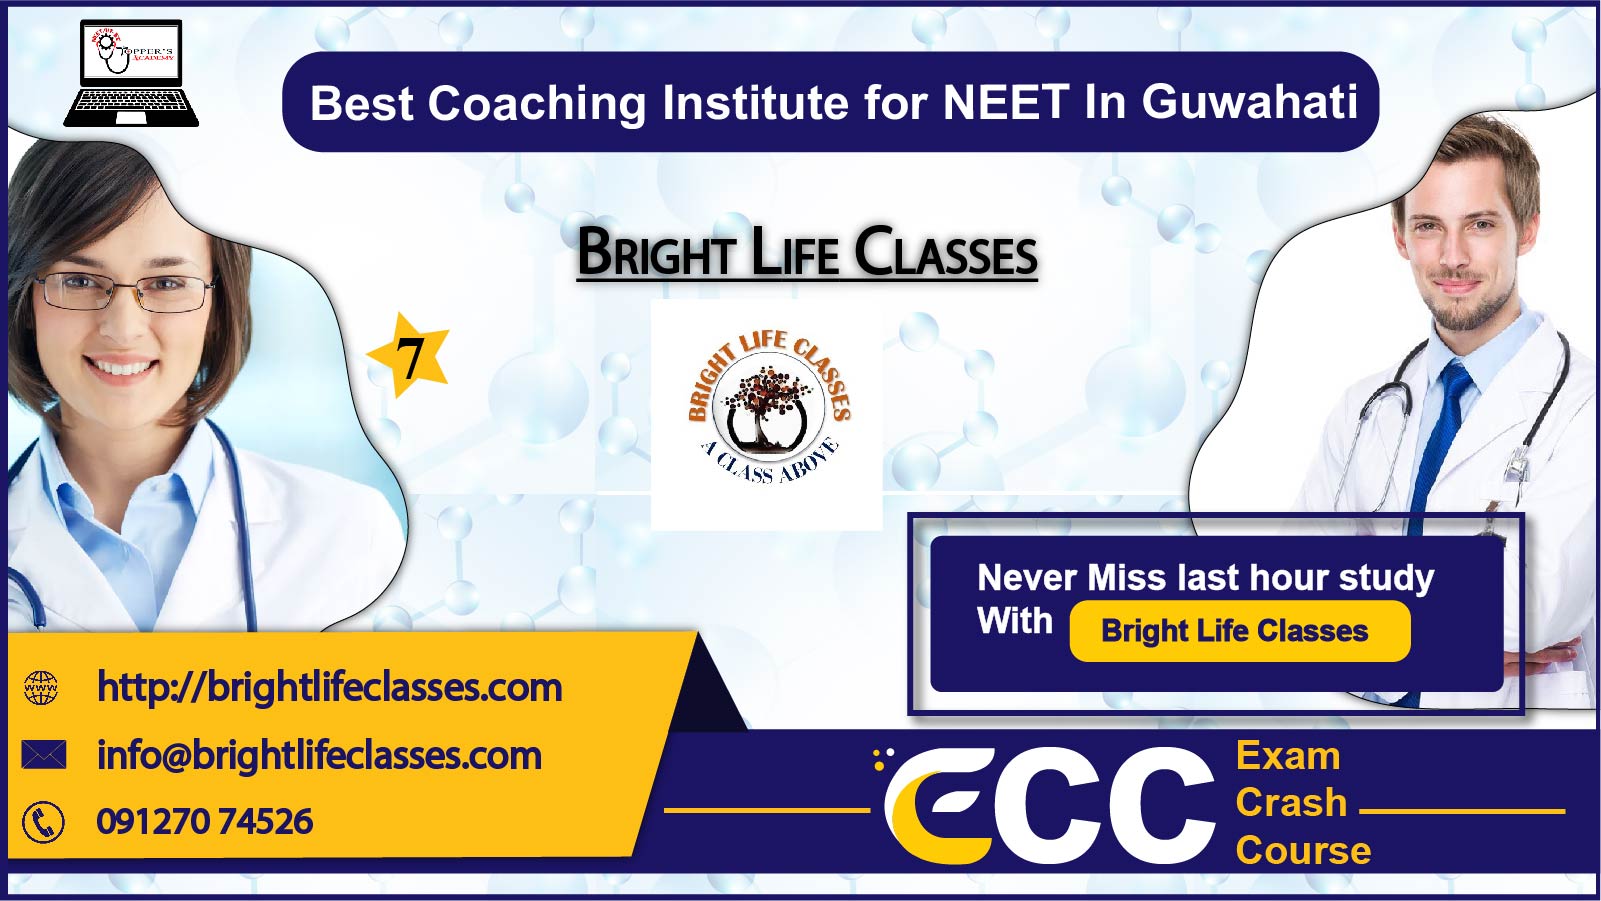 Bright Life Classes NEET Academy in Guwahati